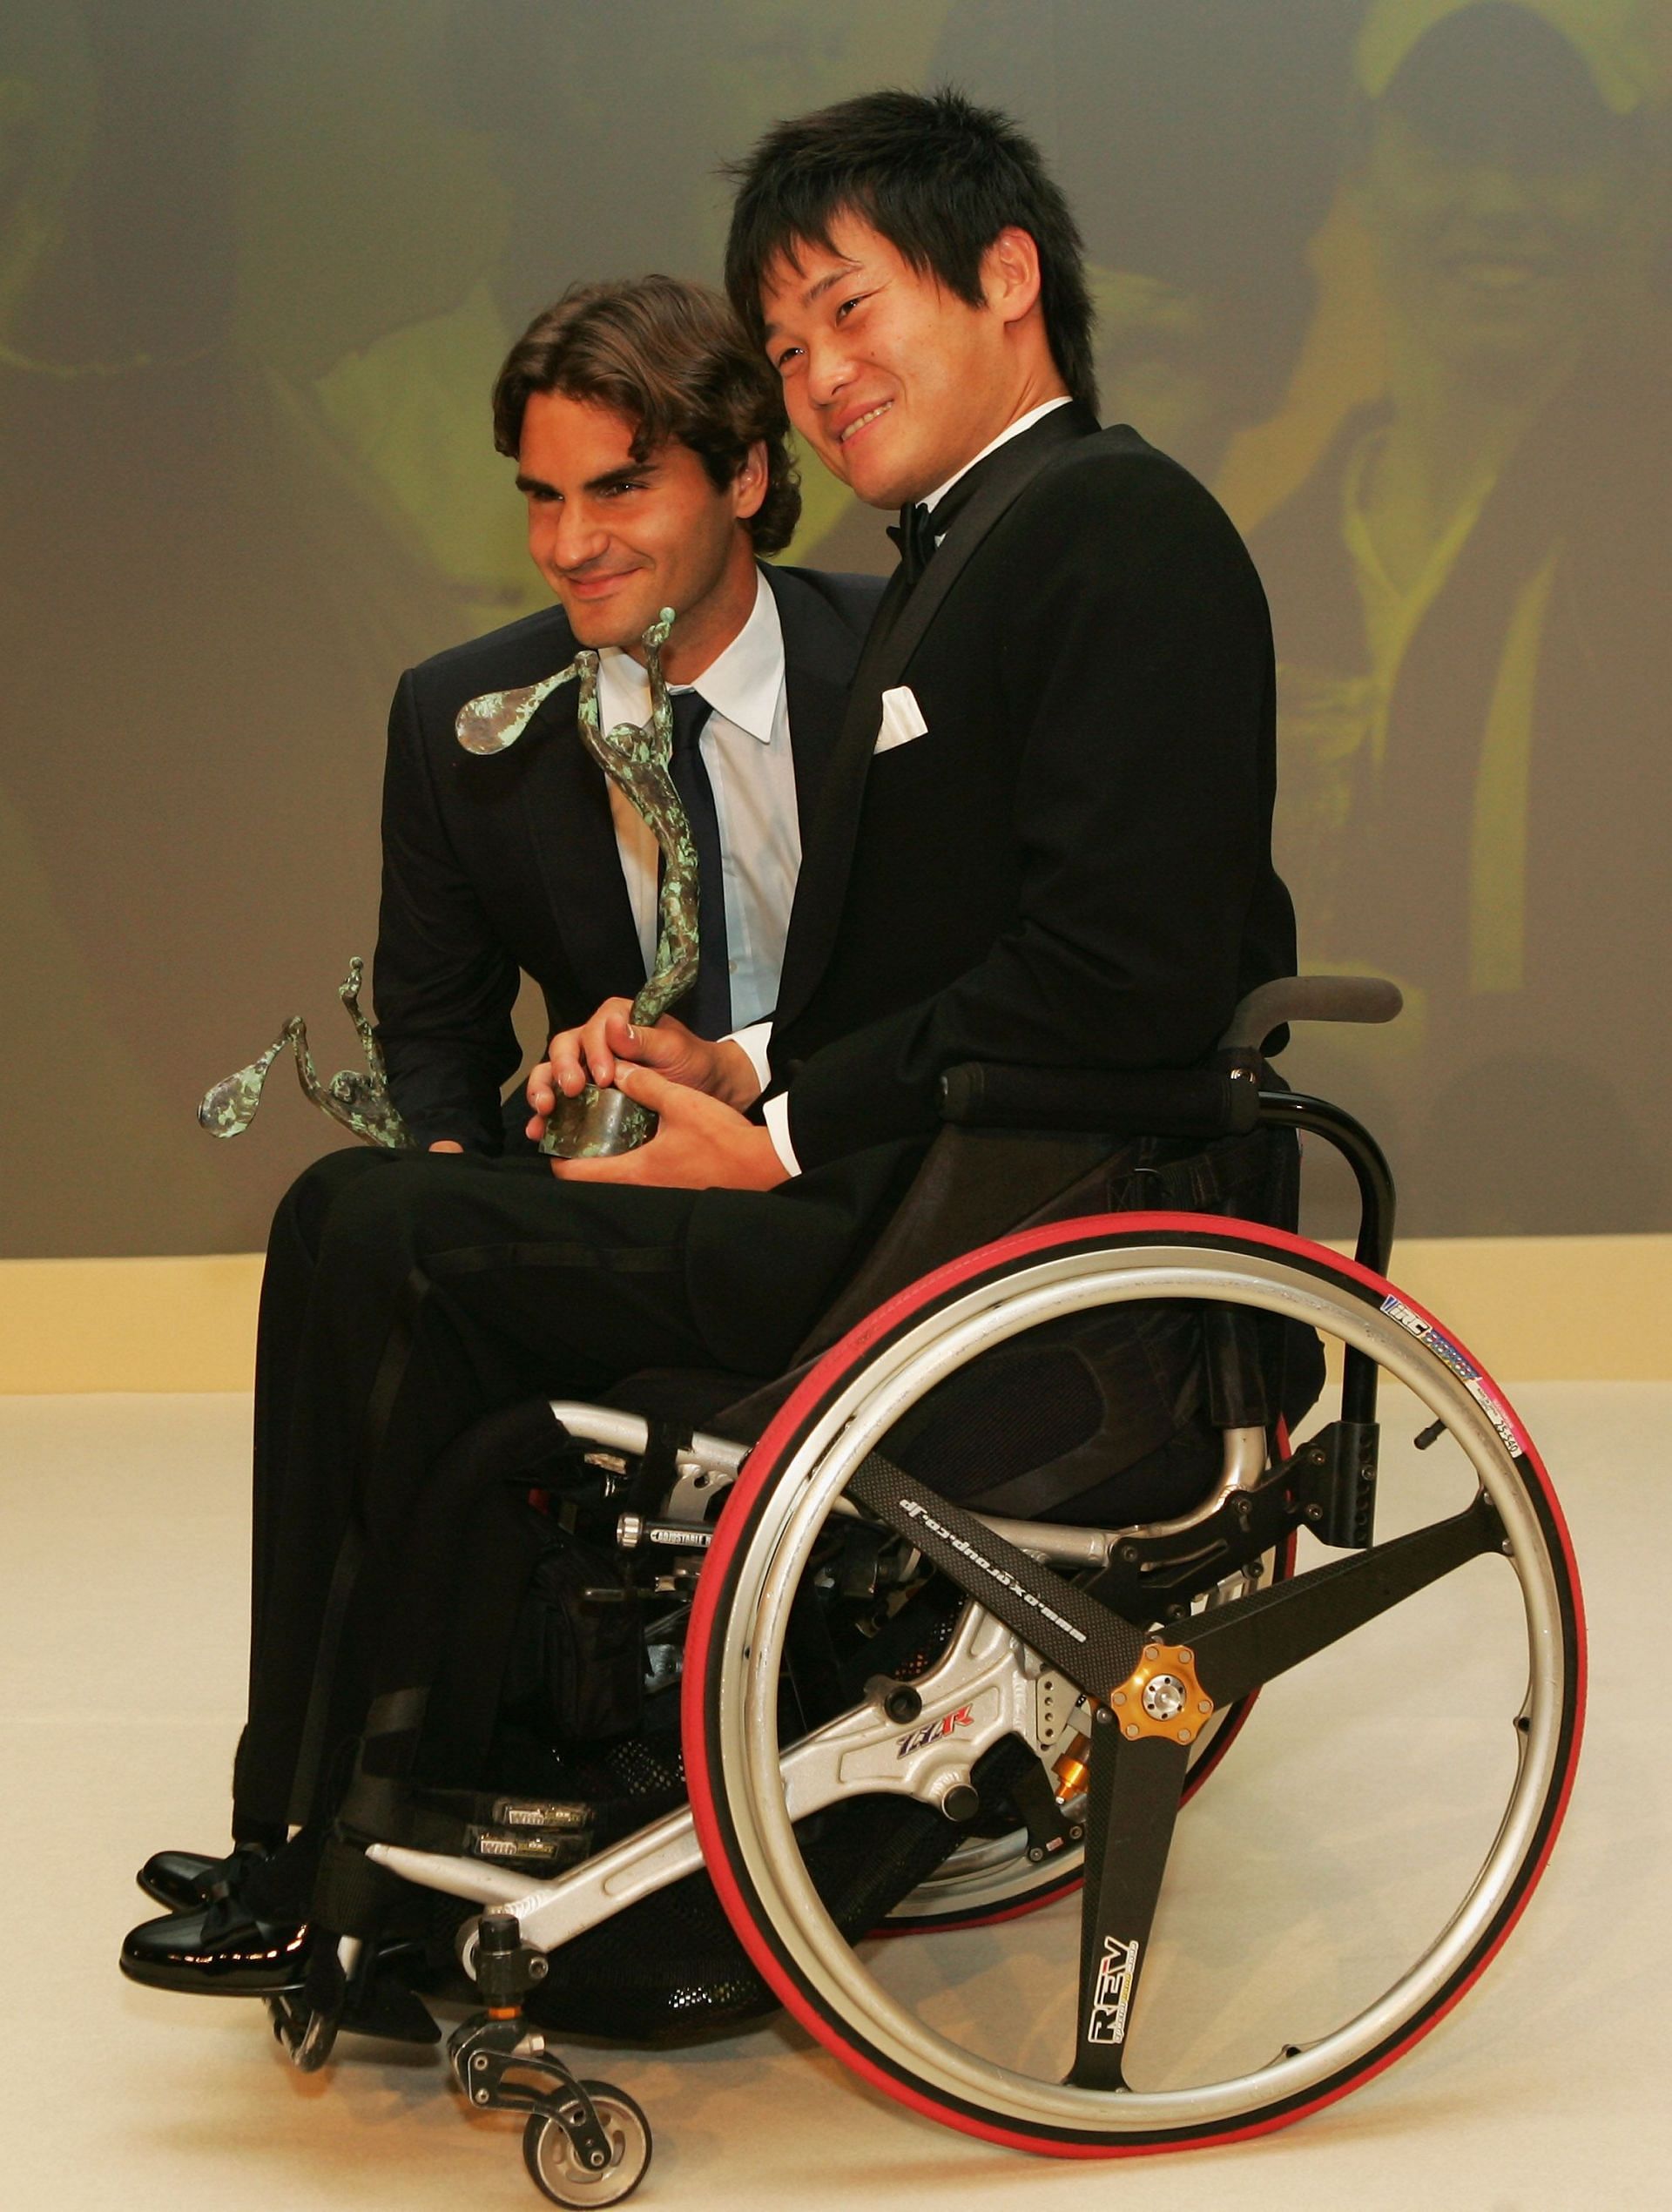 Roger Federer and Shingo Kunieda at the ITF World Champions Dinner - 2008